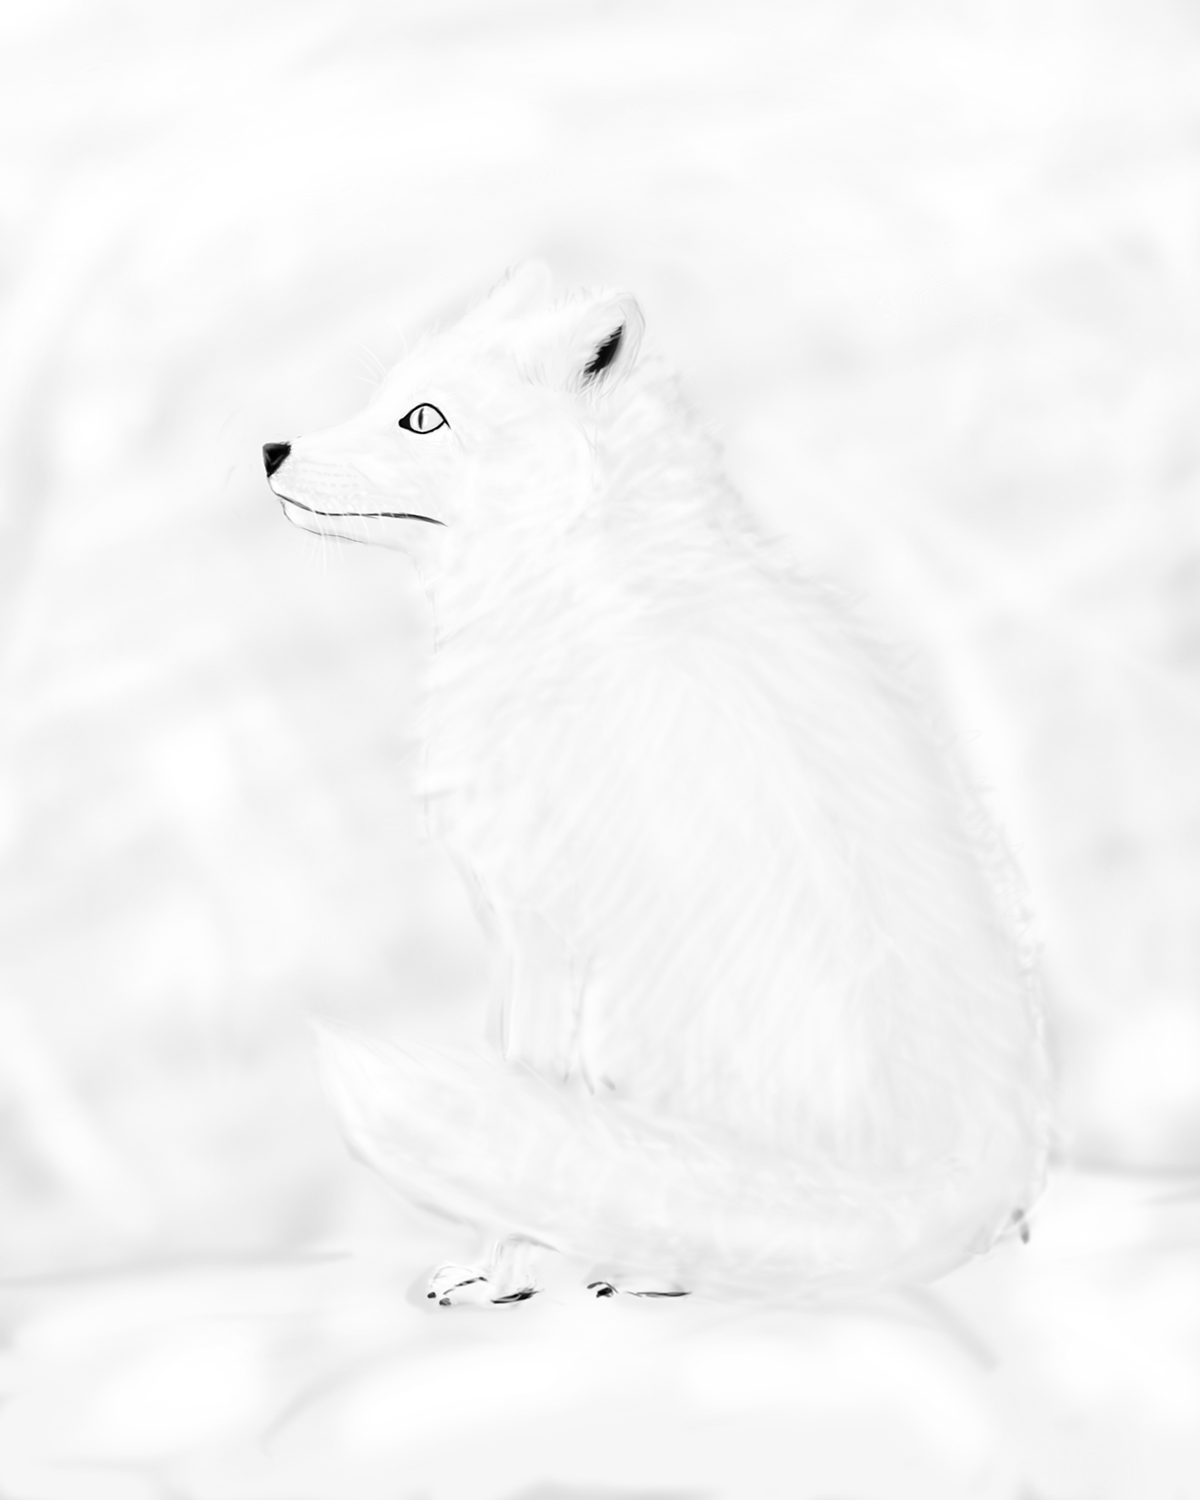 snow FOX White whiteout animal carnivore portrait dog wolf Foxy shy hidden eyes